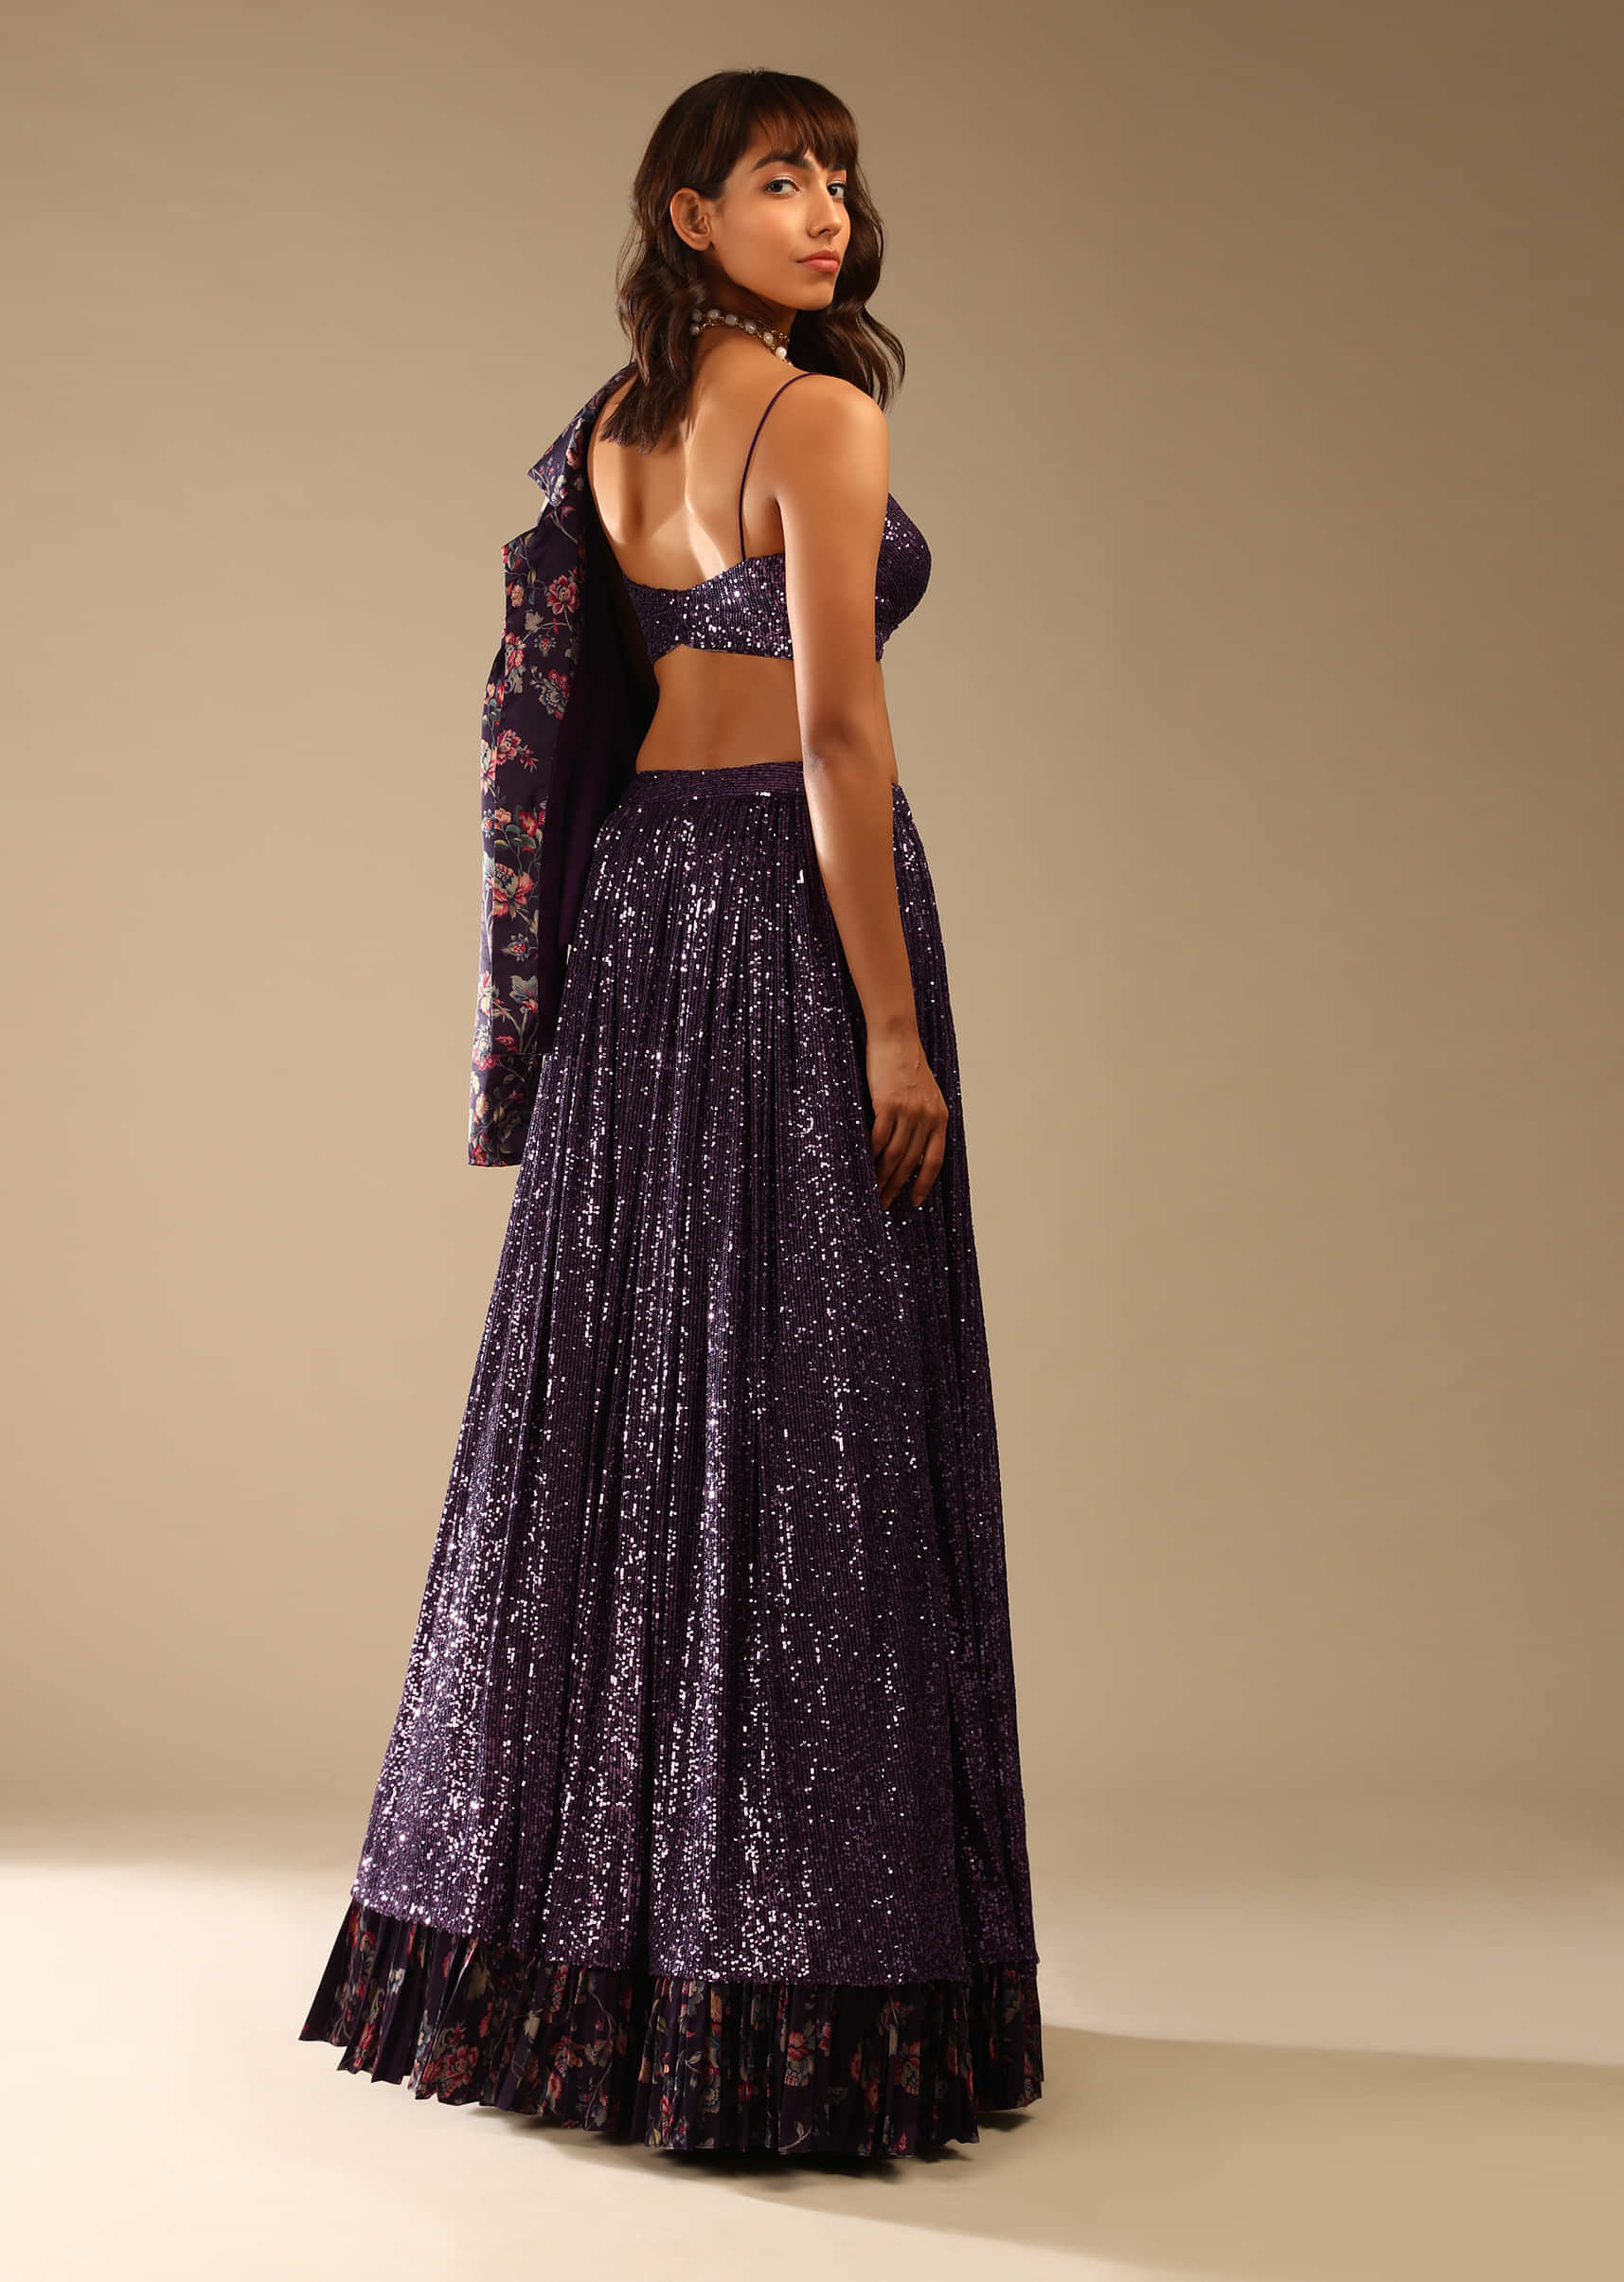 Jewel Purple Lehenga Choli Embellished In Sequins With A Floral Printed Blazer Jacket And Printed Frill On The Lehenga Hemline Online - Kalki Fashion